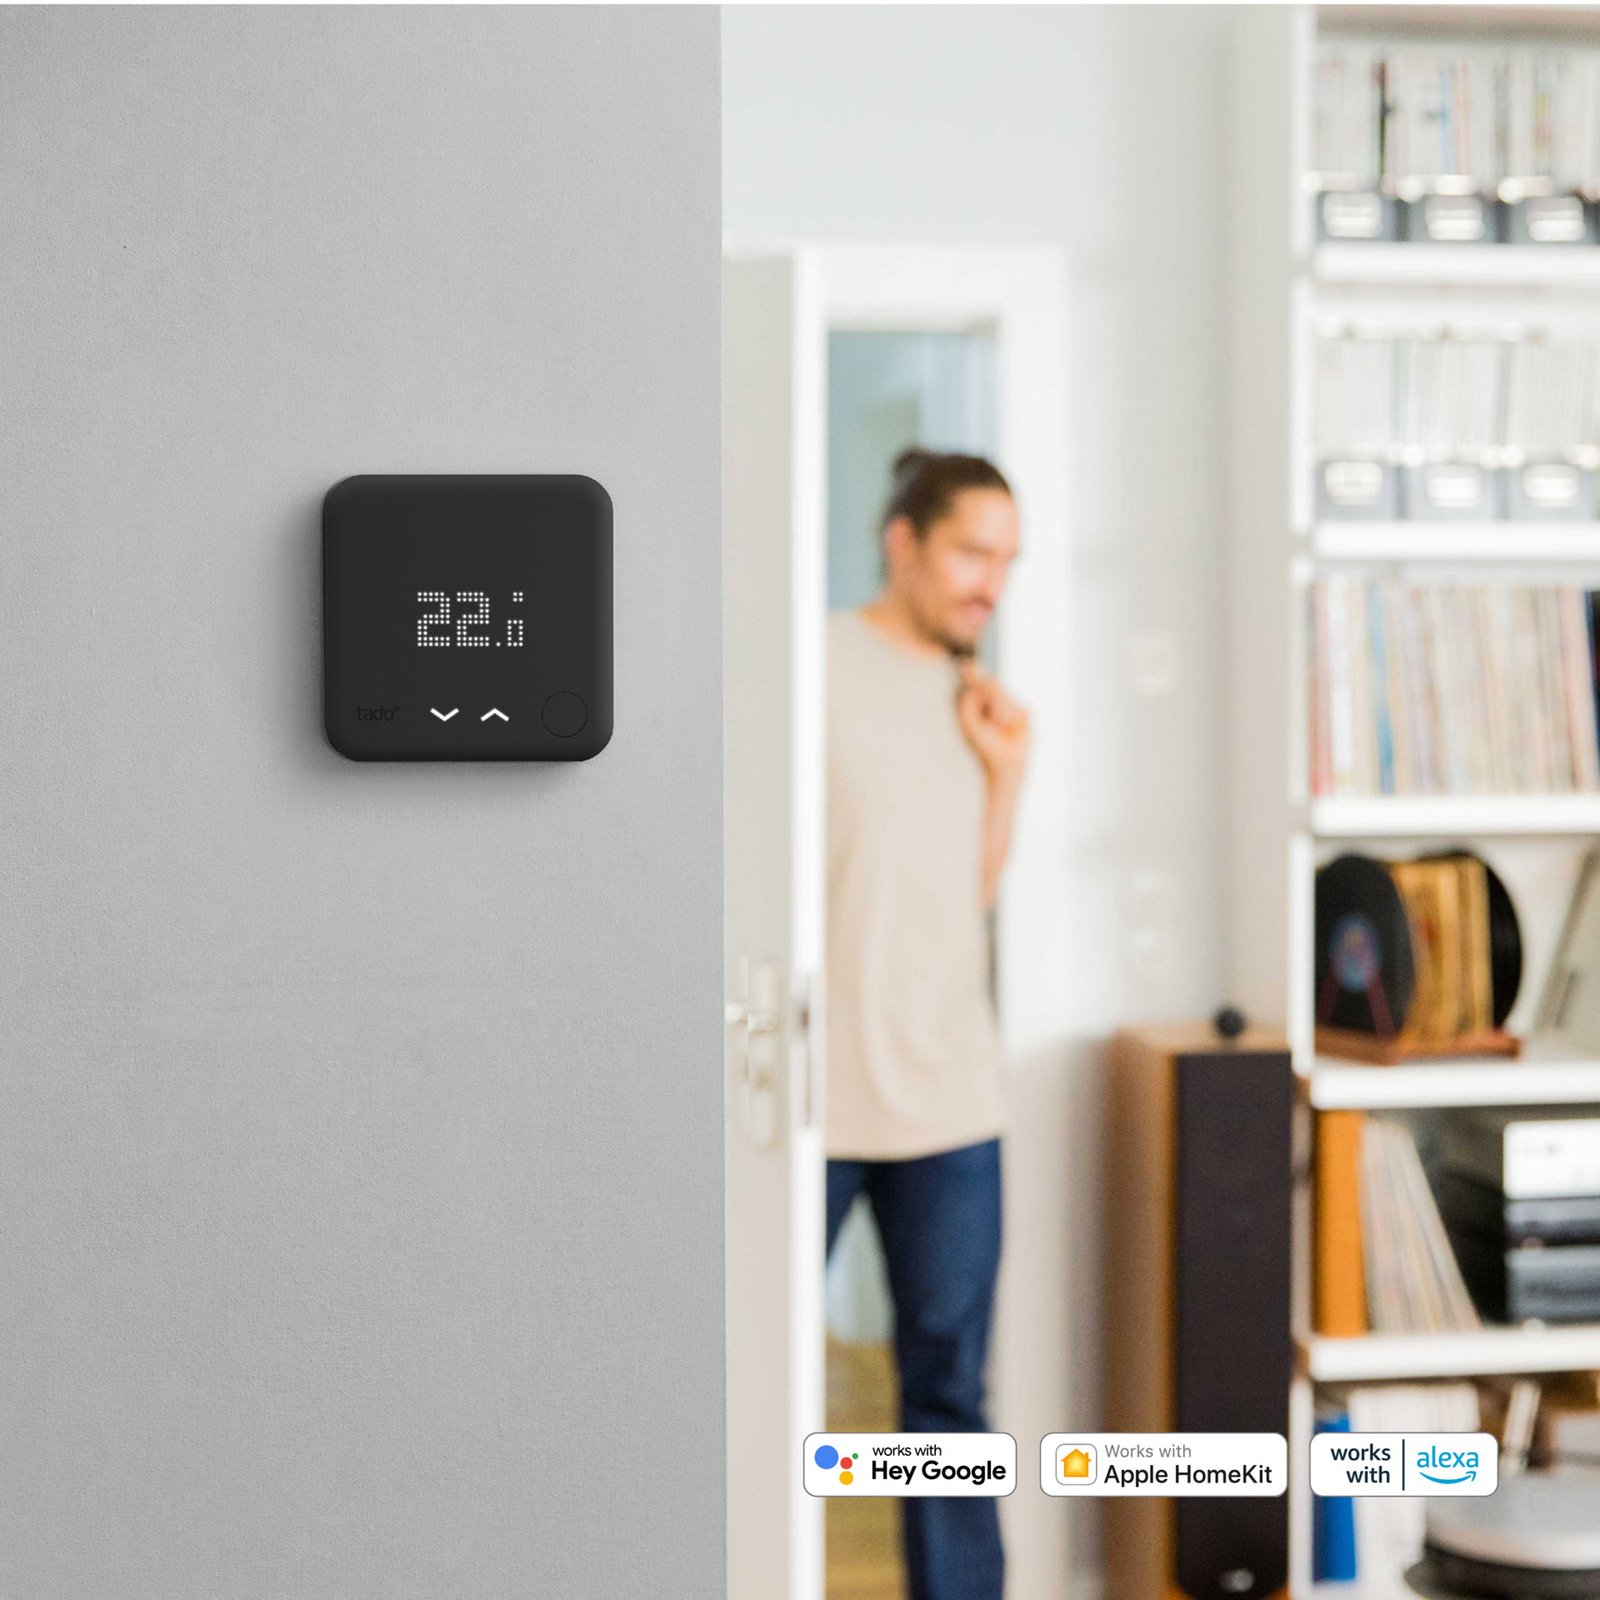 tado° Smart Thermostat V3+ verkabelt, schwarz